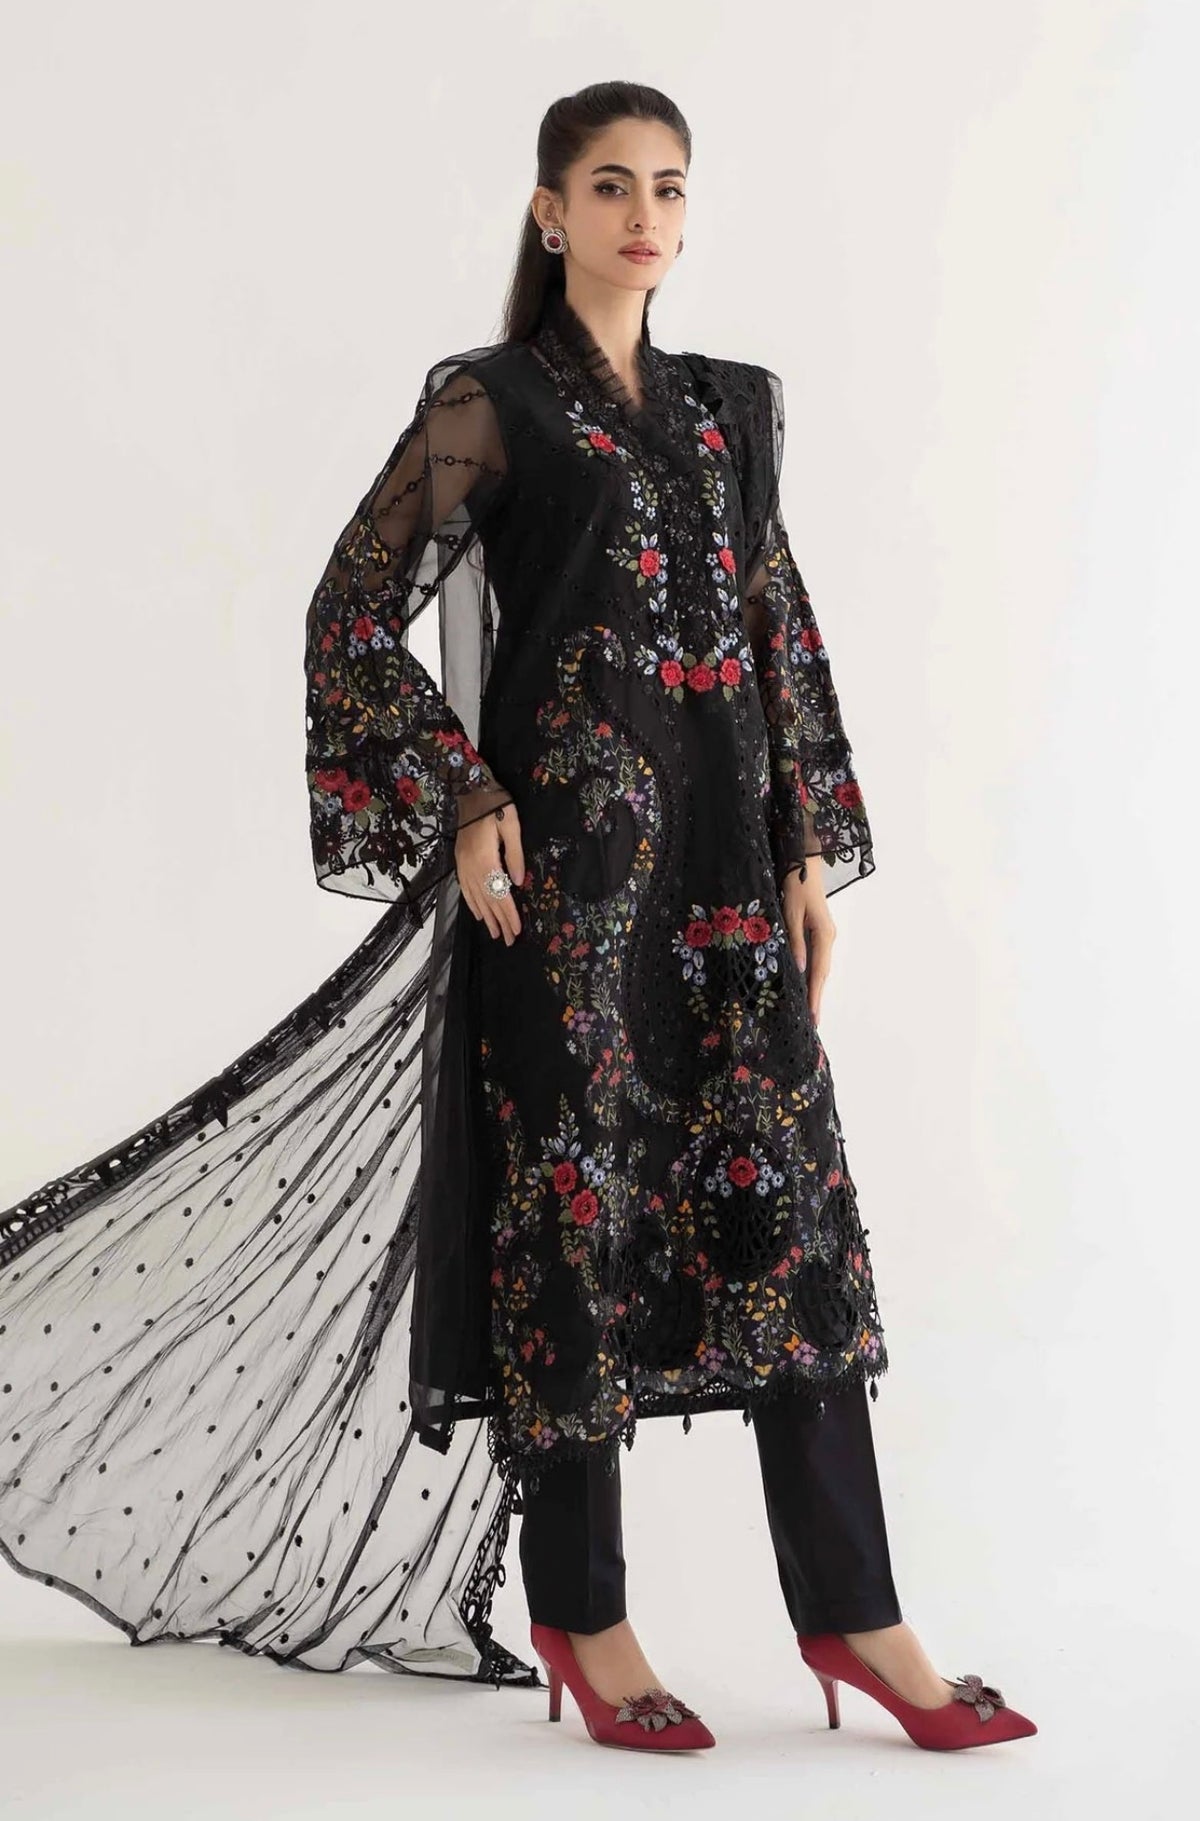 SIMRANS Maria b inspired dalhia 3 piece embroidered suit Blacks